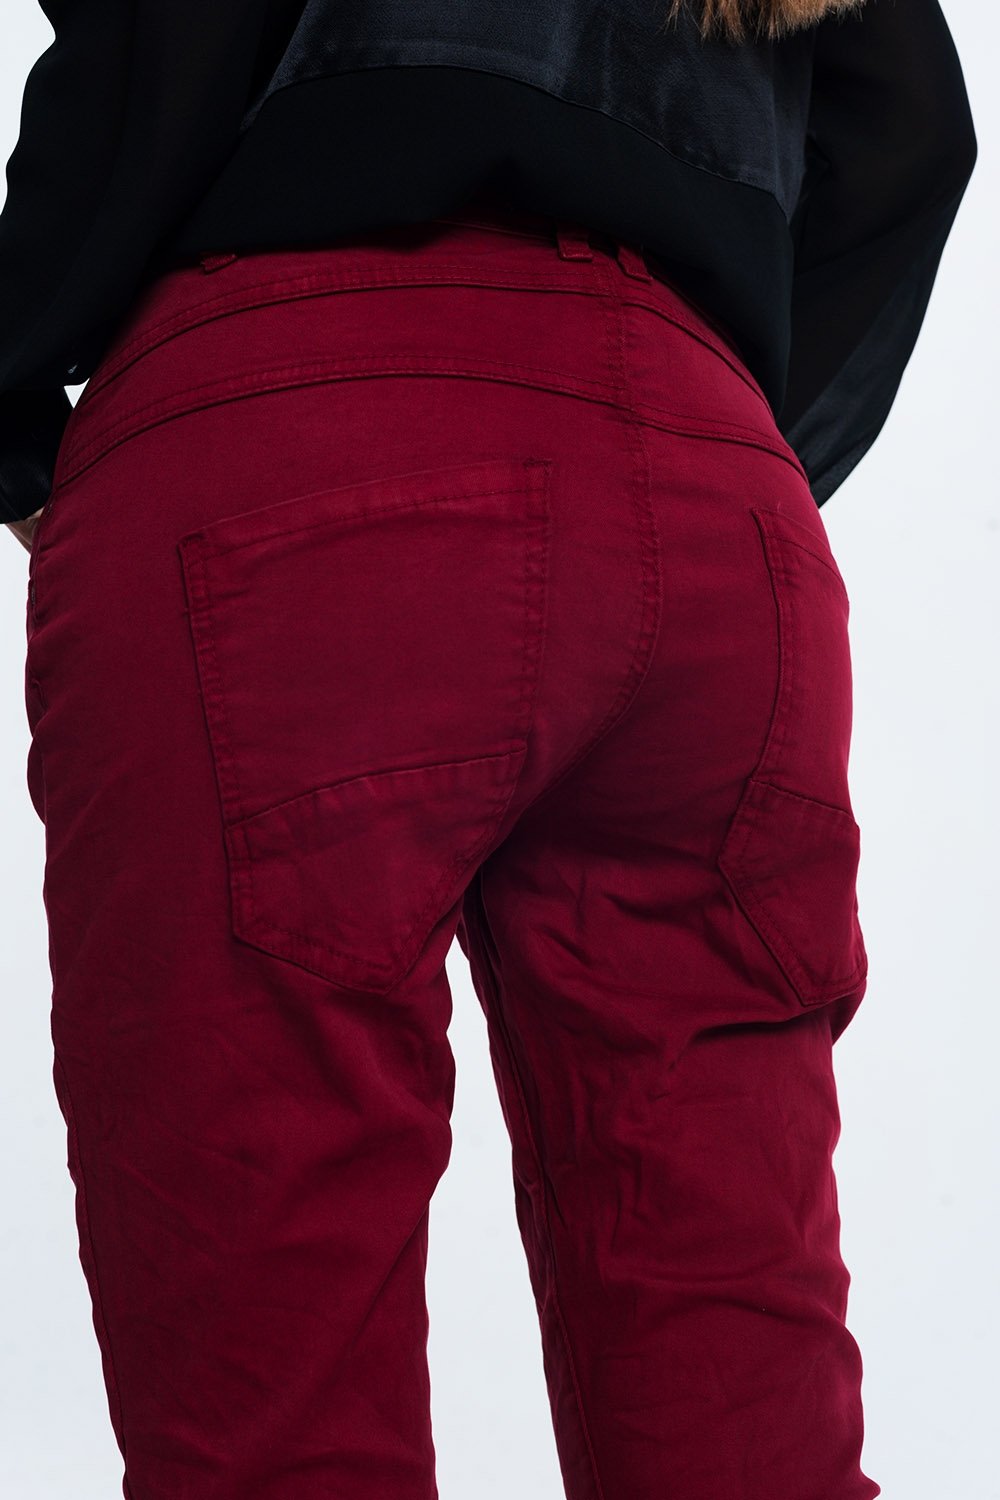 Drop Crotch Skinny Jean in Maroon